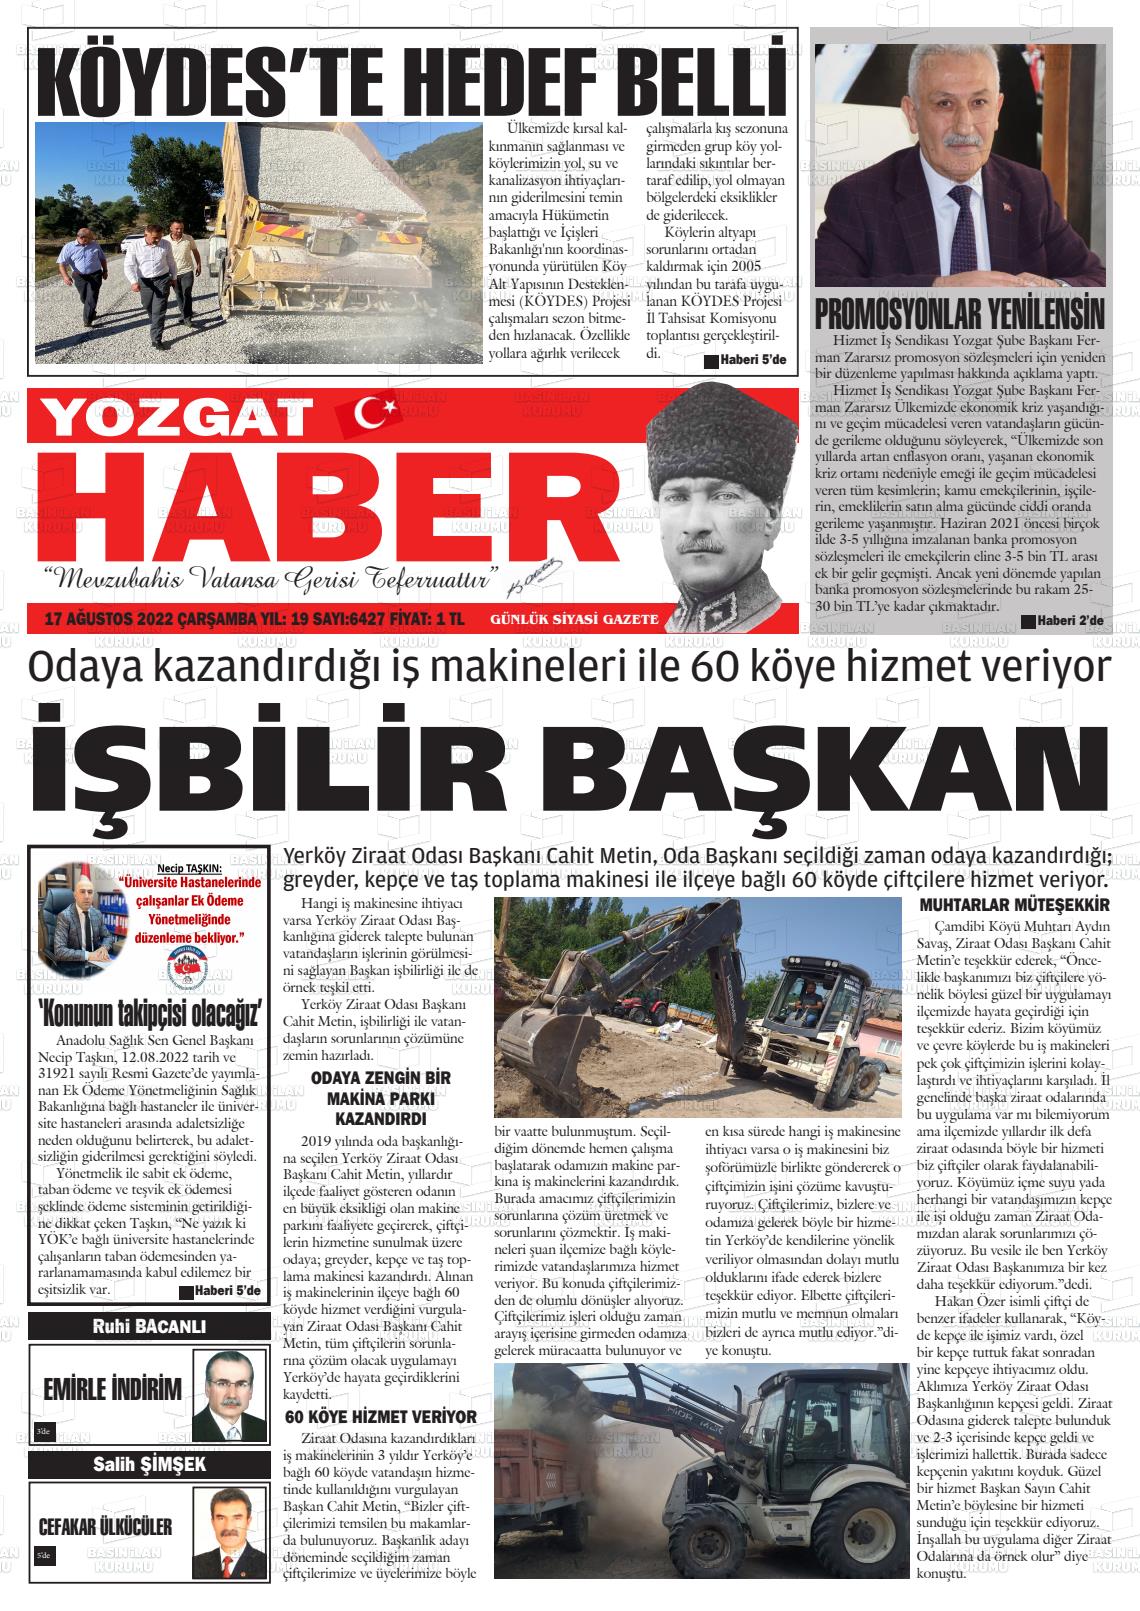 17 Ağustos 2022 Yozgat Haber Gazete Manşeti